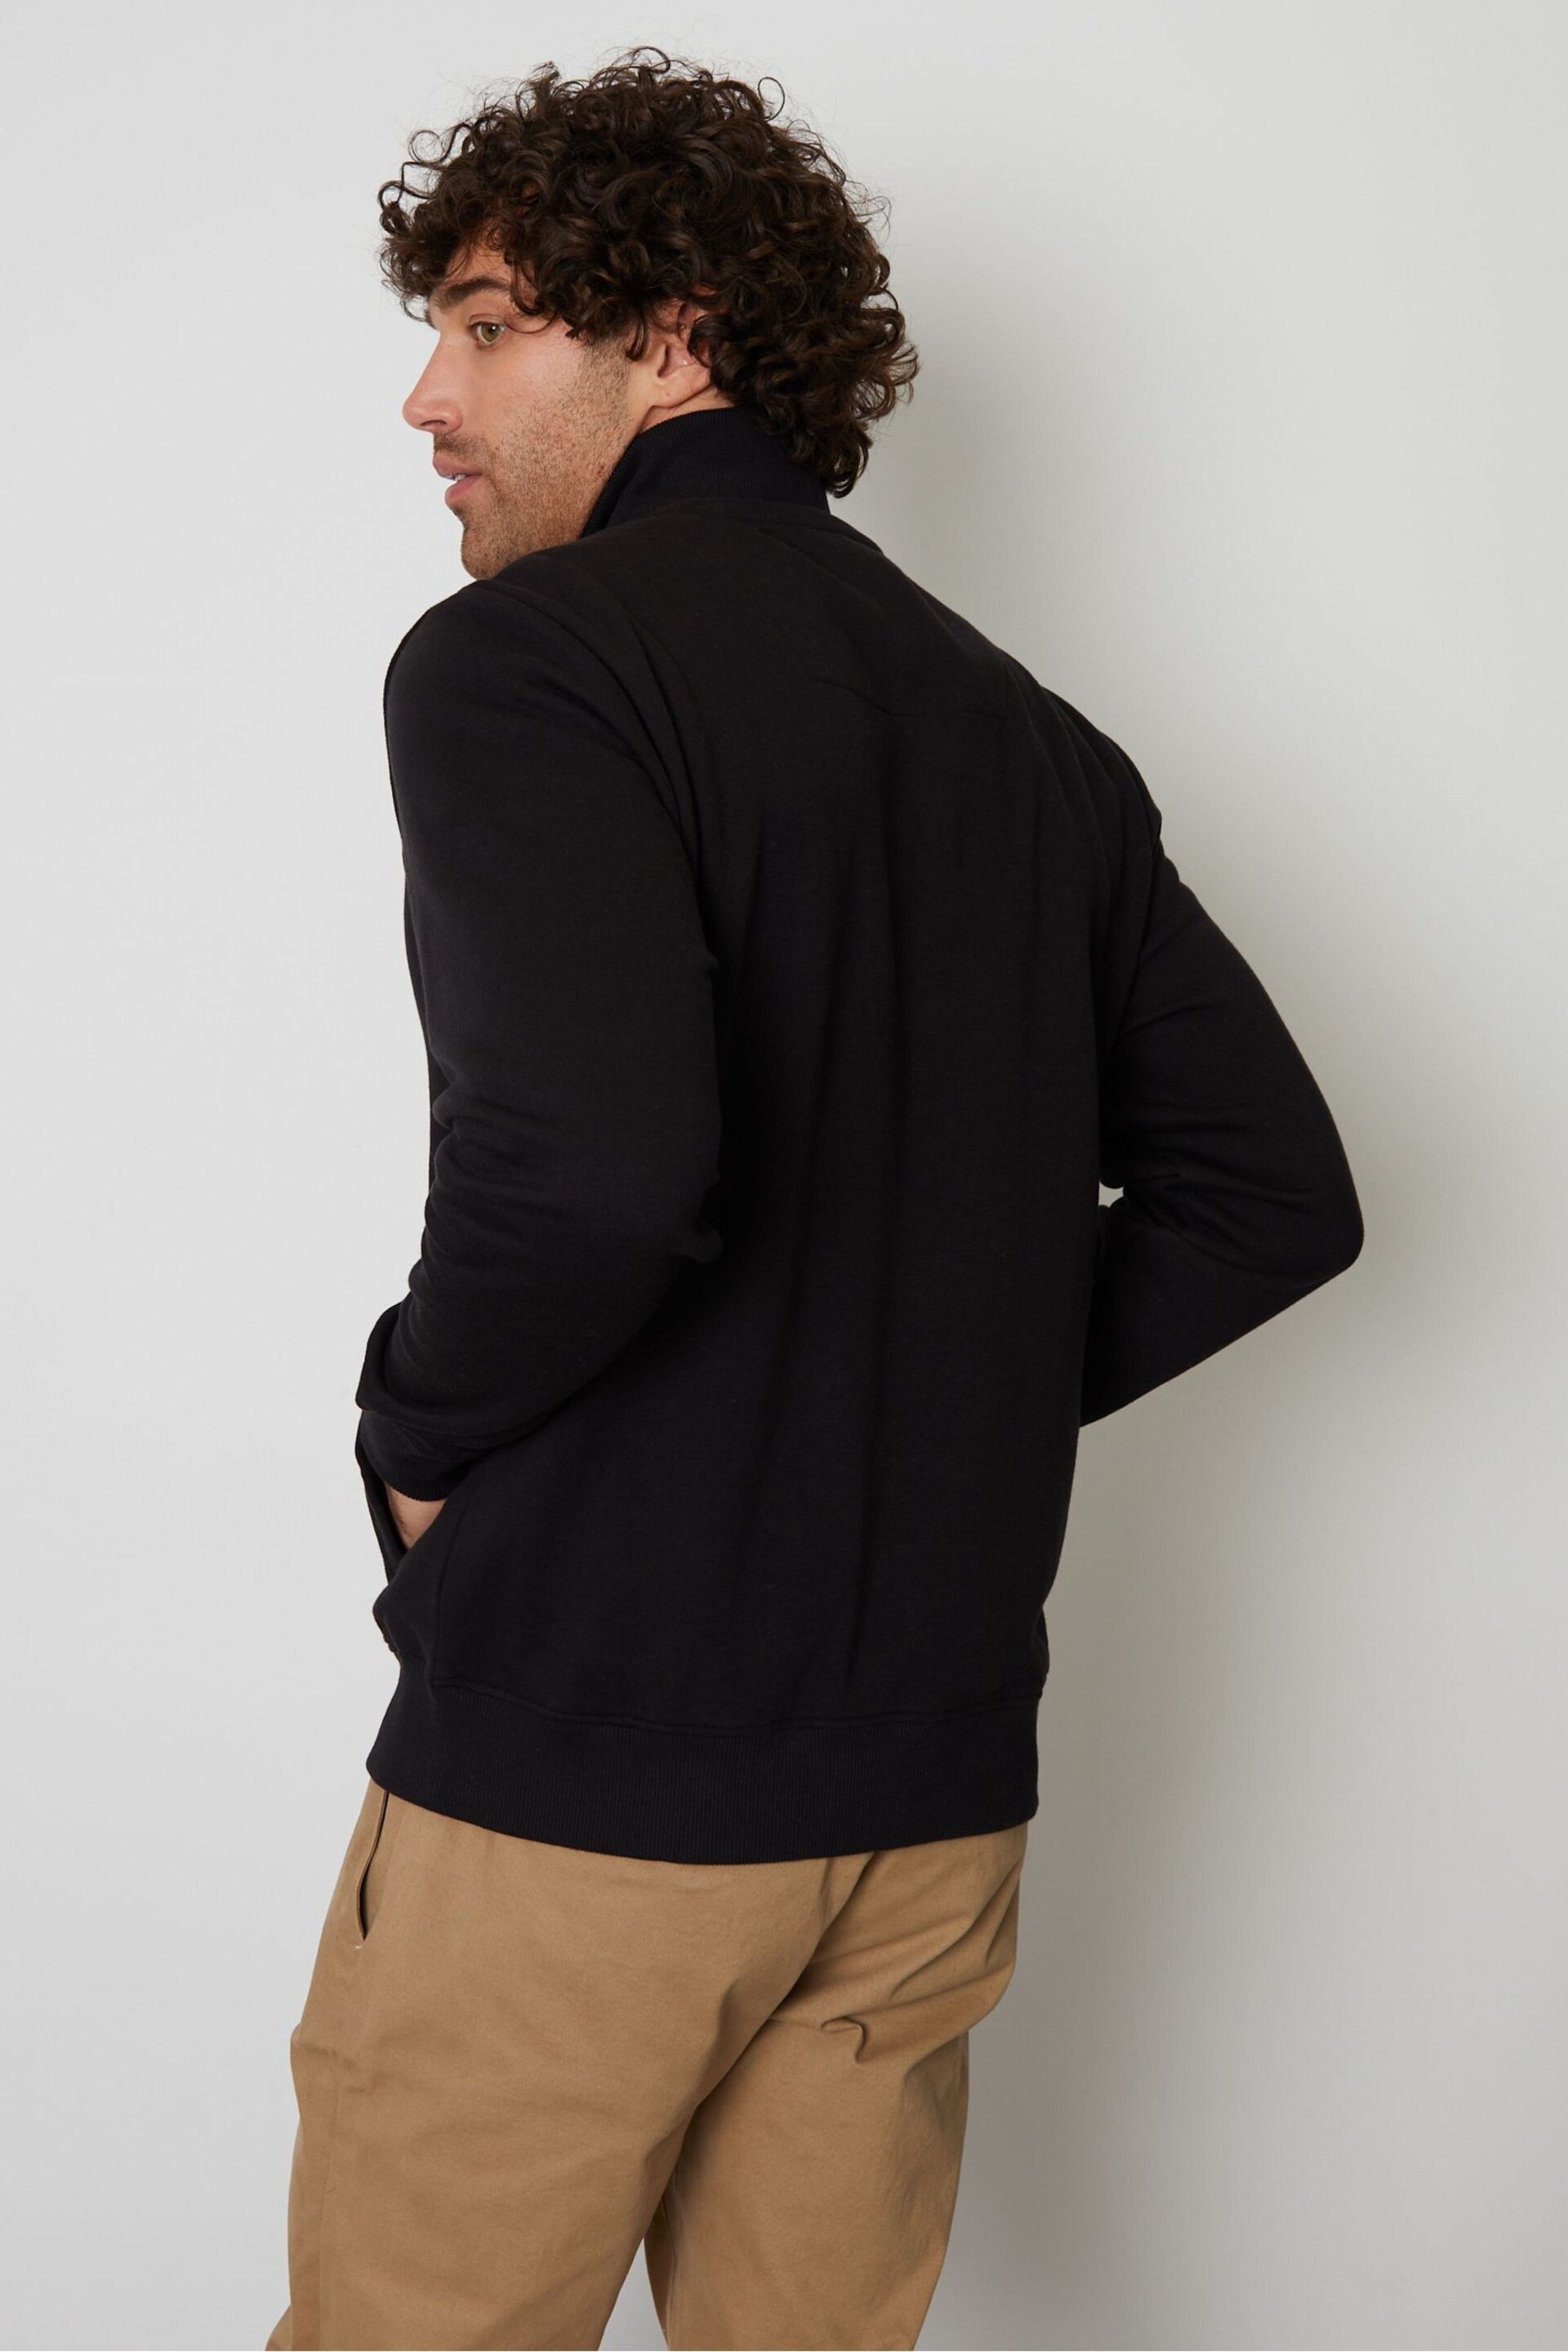 Threadbare Black 1/4 Zip Neck Sweatshirt - Image 2 of 4